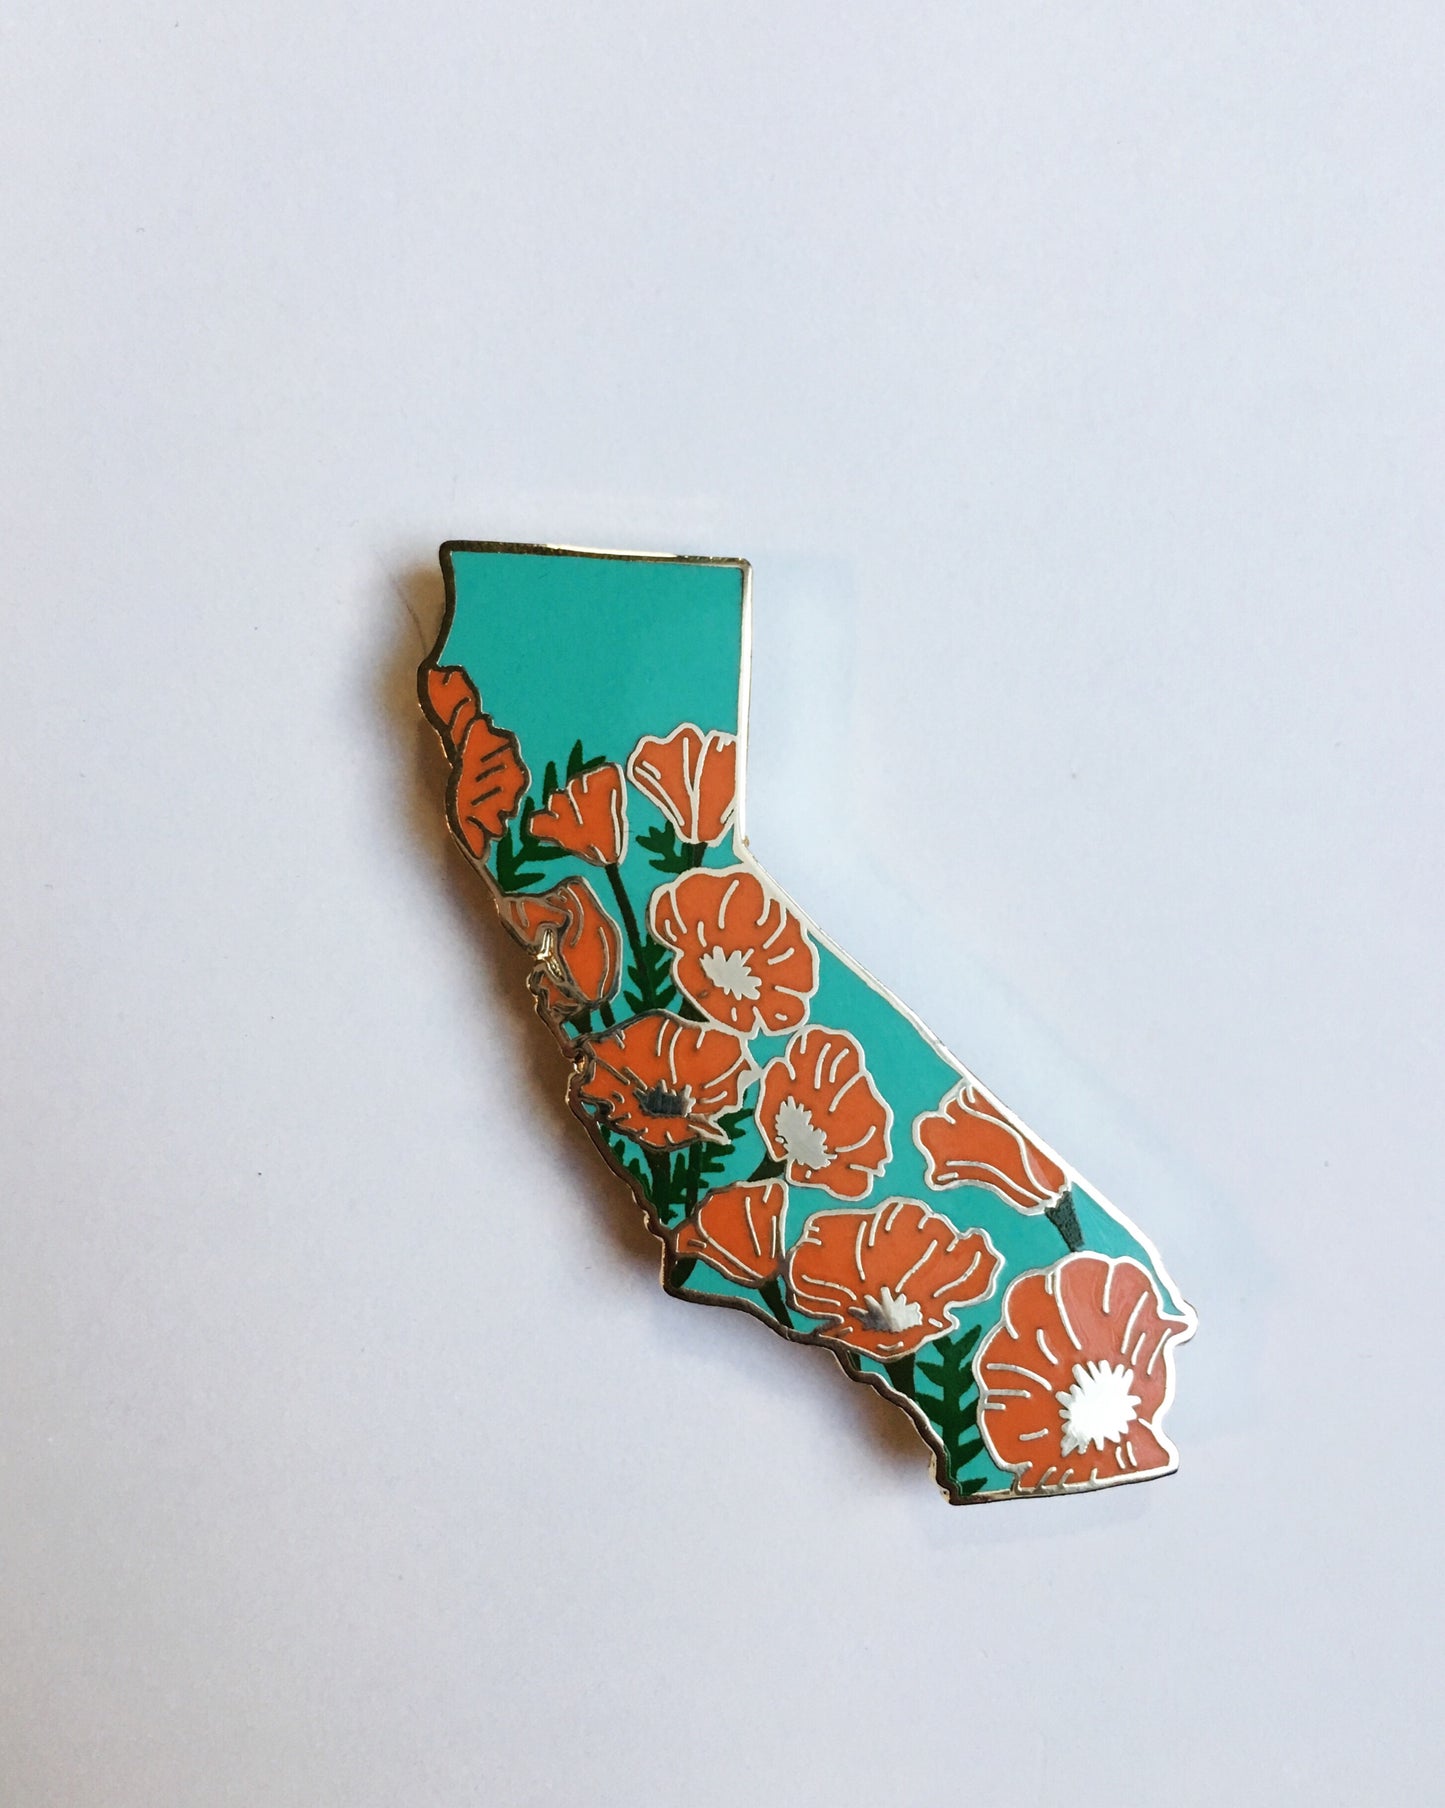 California Poppy Hard Enamel Pin - State Flower Series